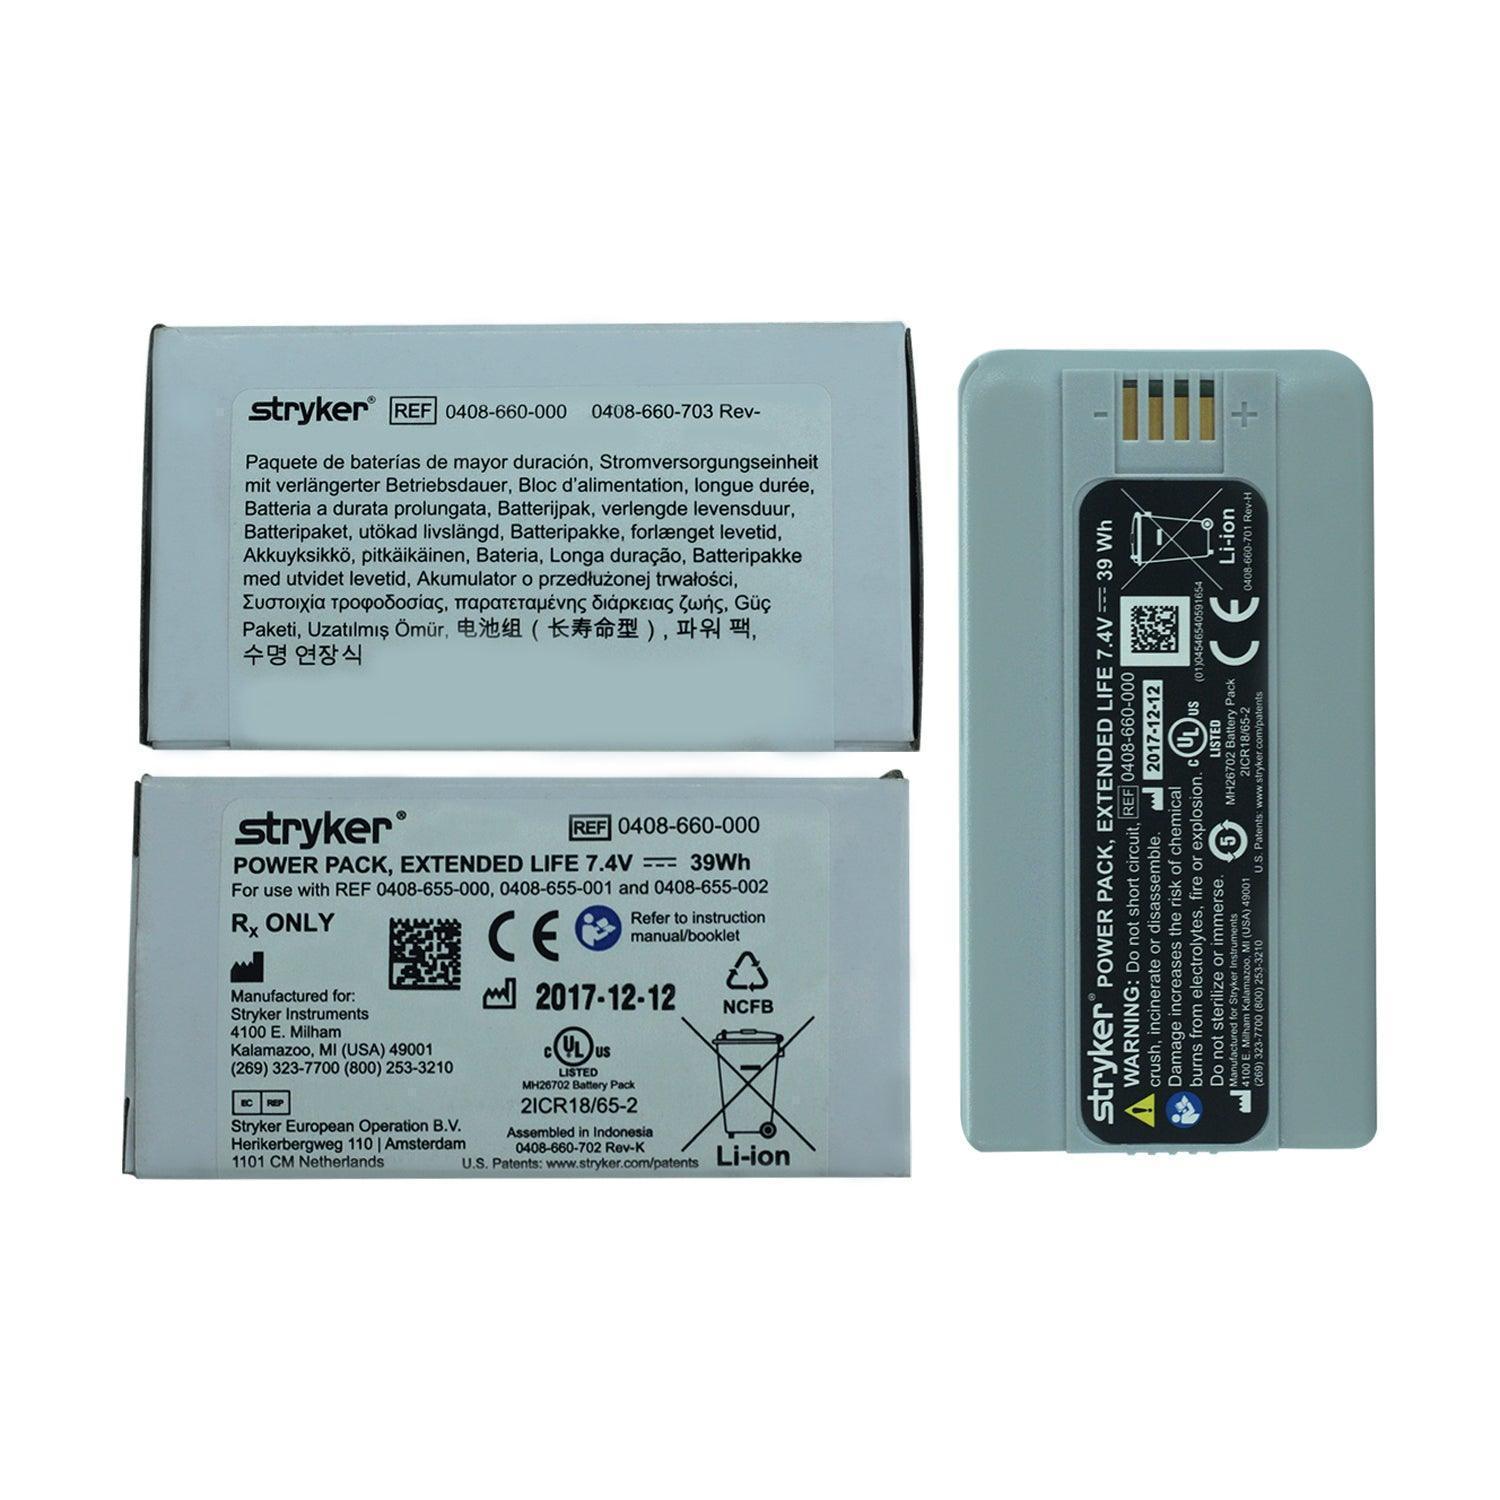 Original Stryker 0408-660-000 for Surgical Headphone Power Pack Extended 7.4V 39Wh Li-Ion Battery Medical Battery, Rechargeable, Stryker, Surgical Headphone 0408-660-000 Stryker